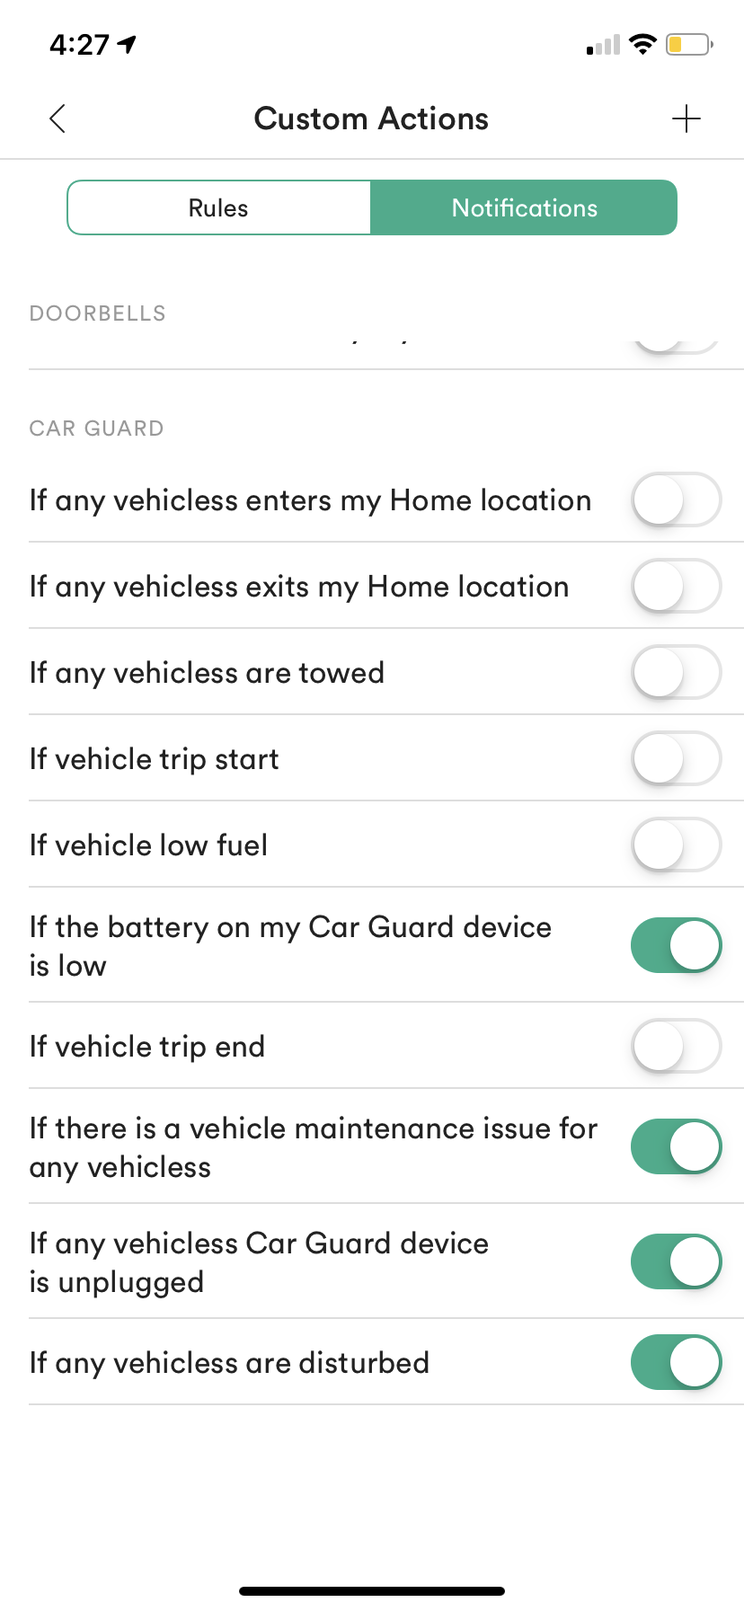 vivint car guard - gps tracking tamper alerts and vehicle diagnostics - youtube on vivint car guard review